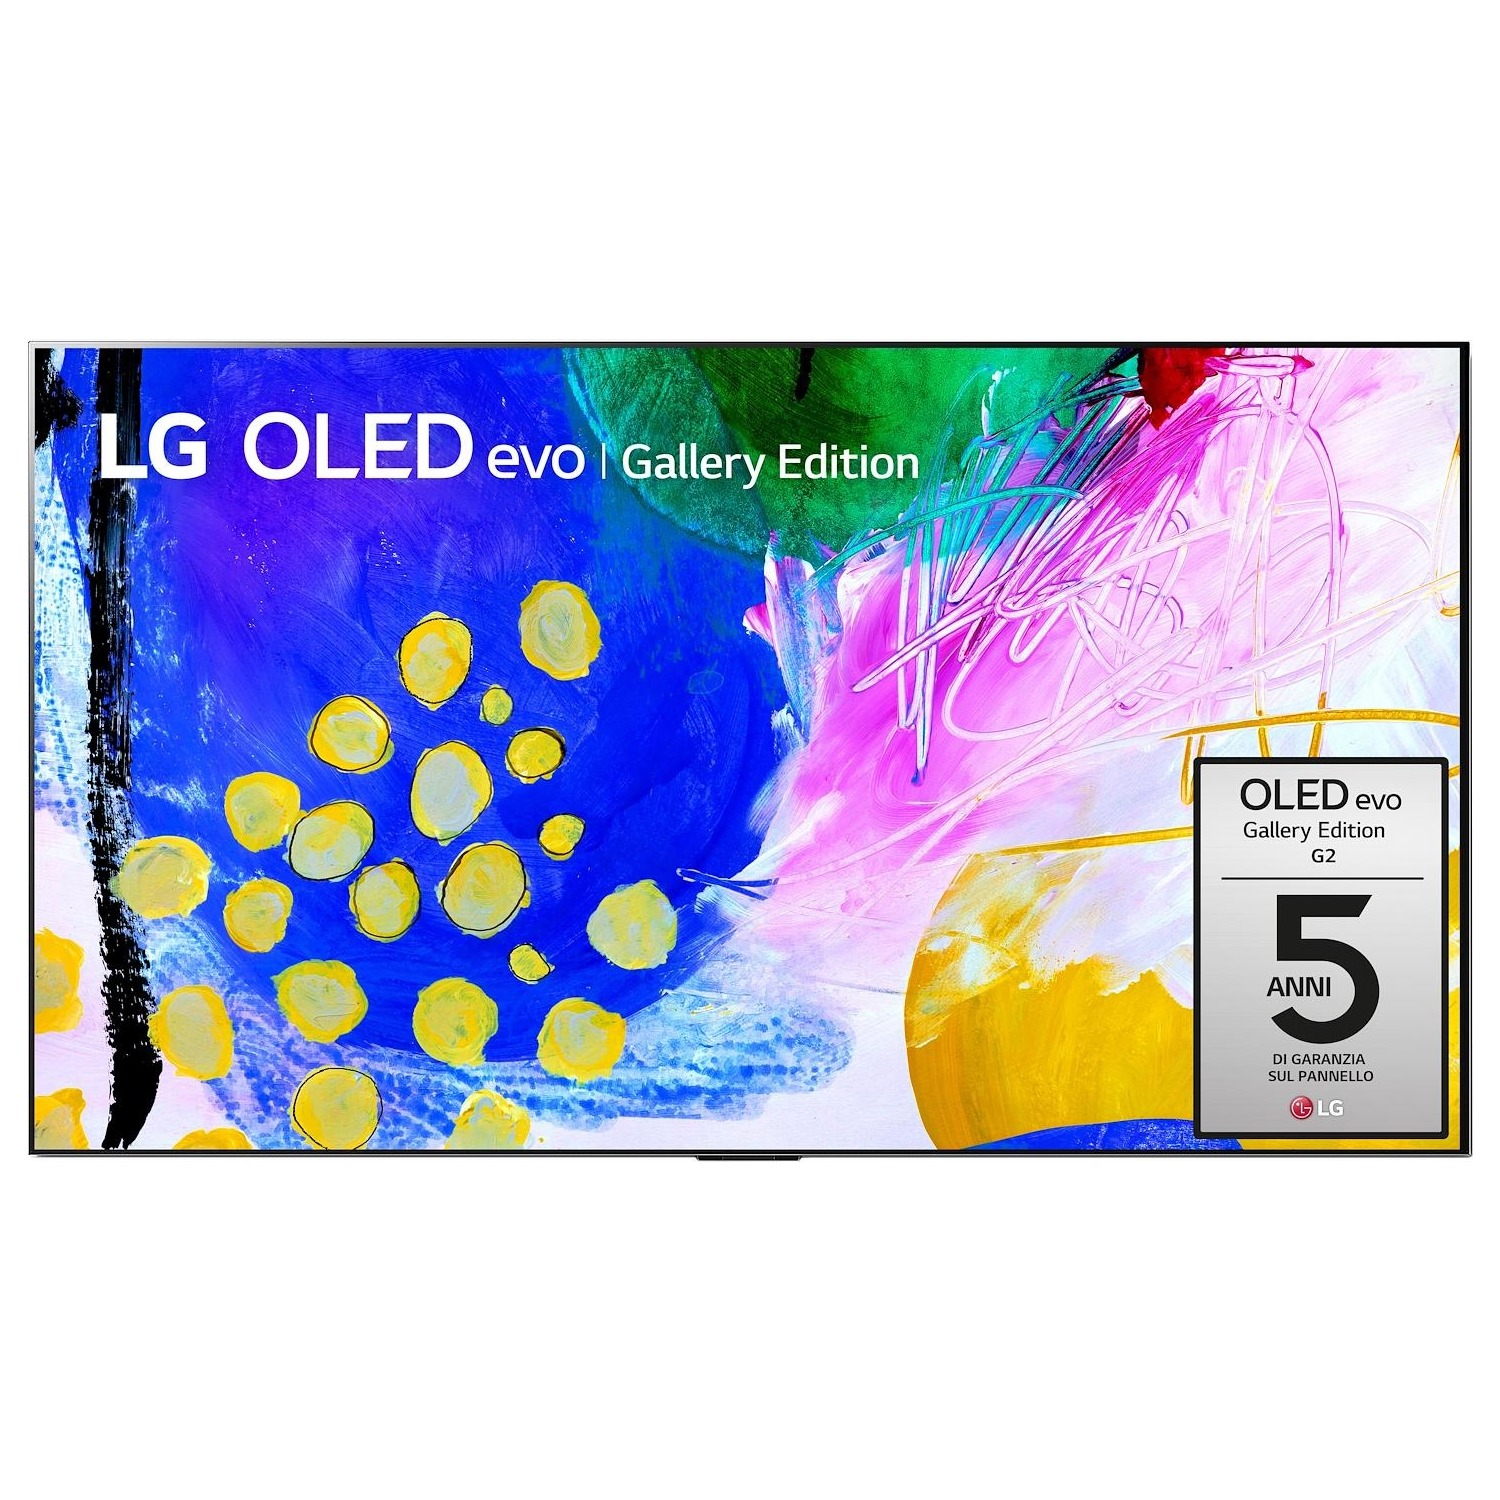 Immagine per TV OLED LG OLED55G26 Calibrato 4K e FULL HD da DIMOStore